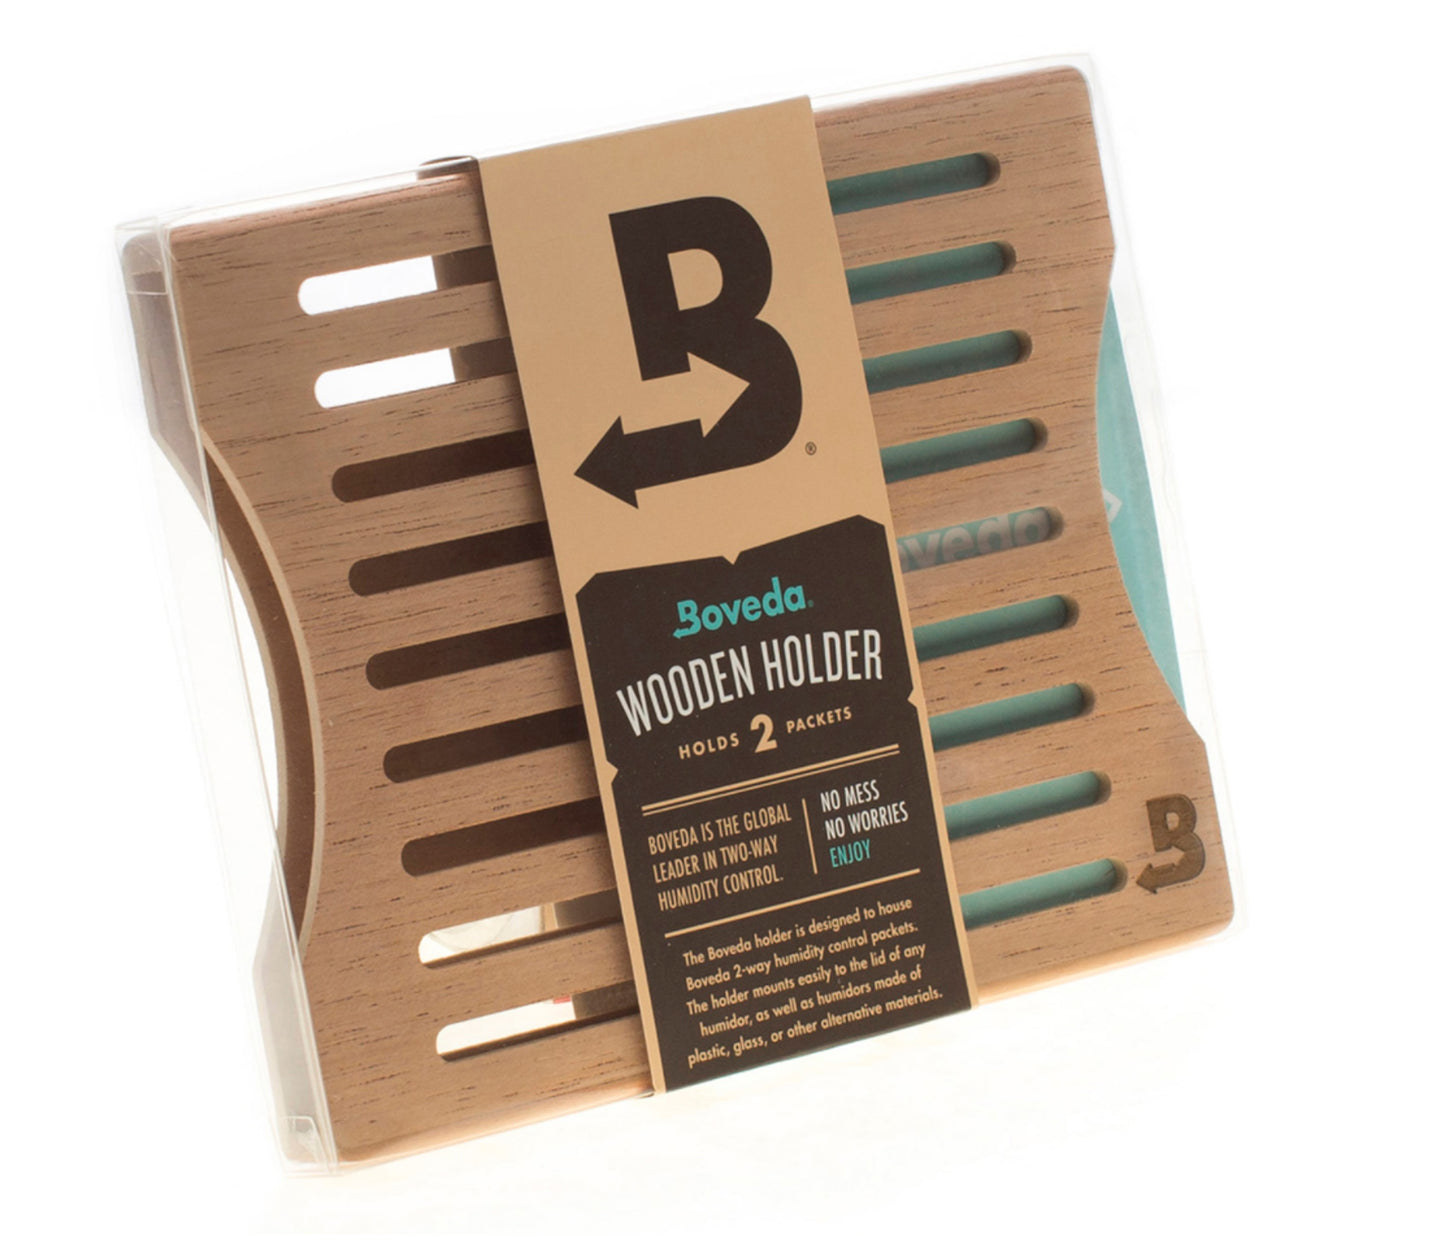 Boveda-Wooden Holder 2 Packets